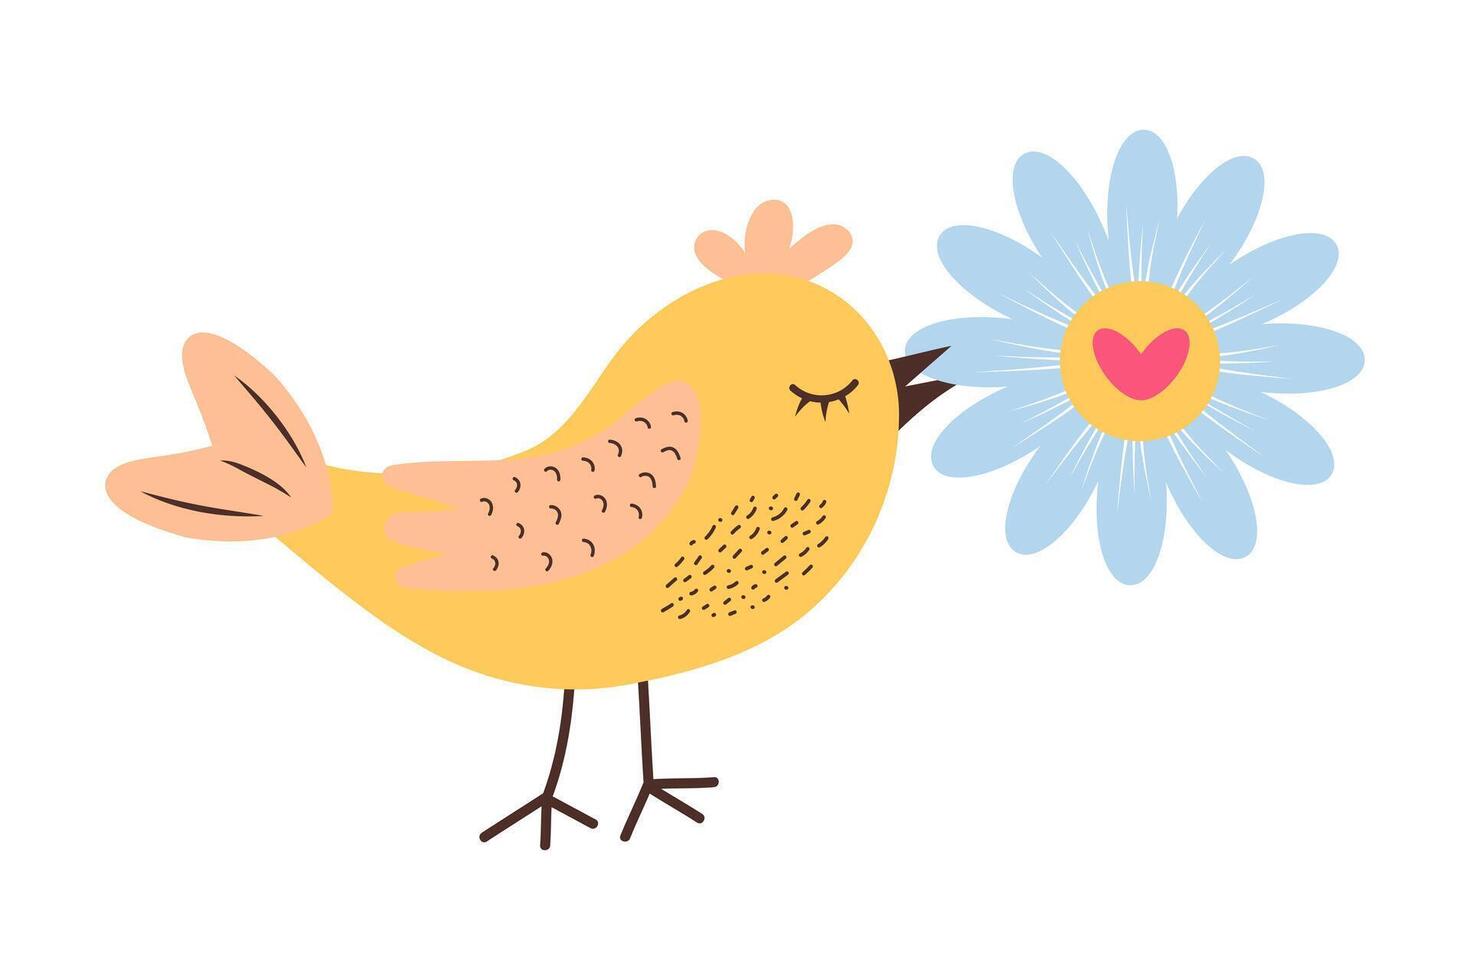 linda amarillo pájaro participación margarita con corazón en sus pico. amor parcela. entrega concepto. San Valentín día romántico clipart. vector